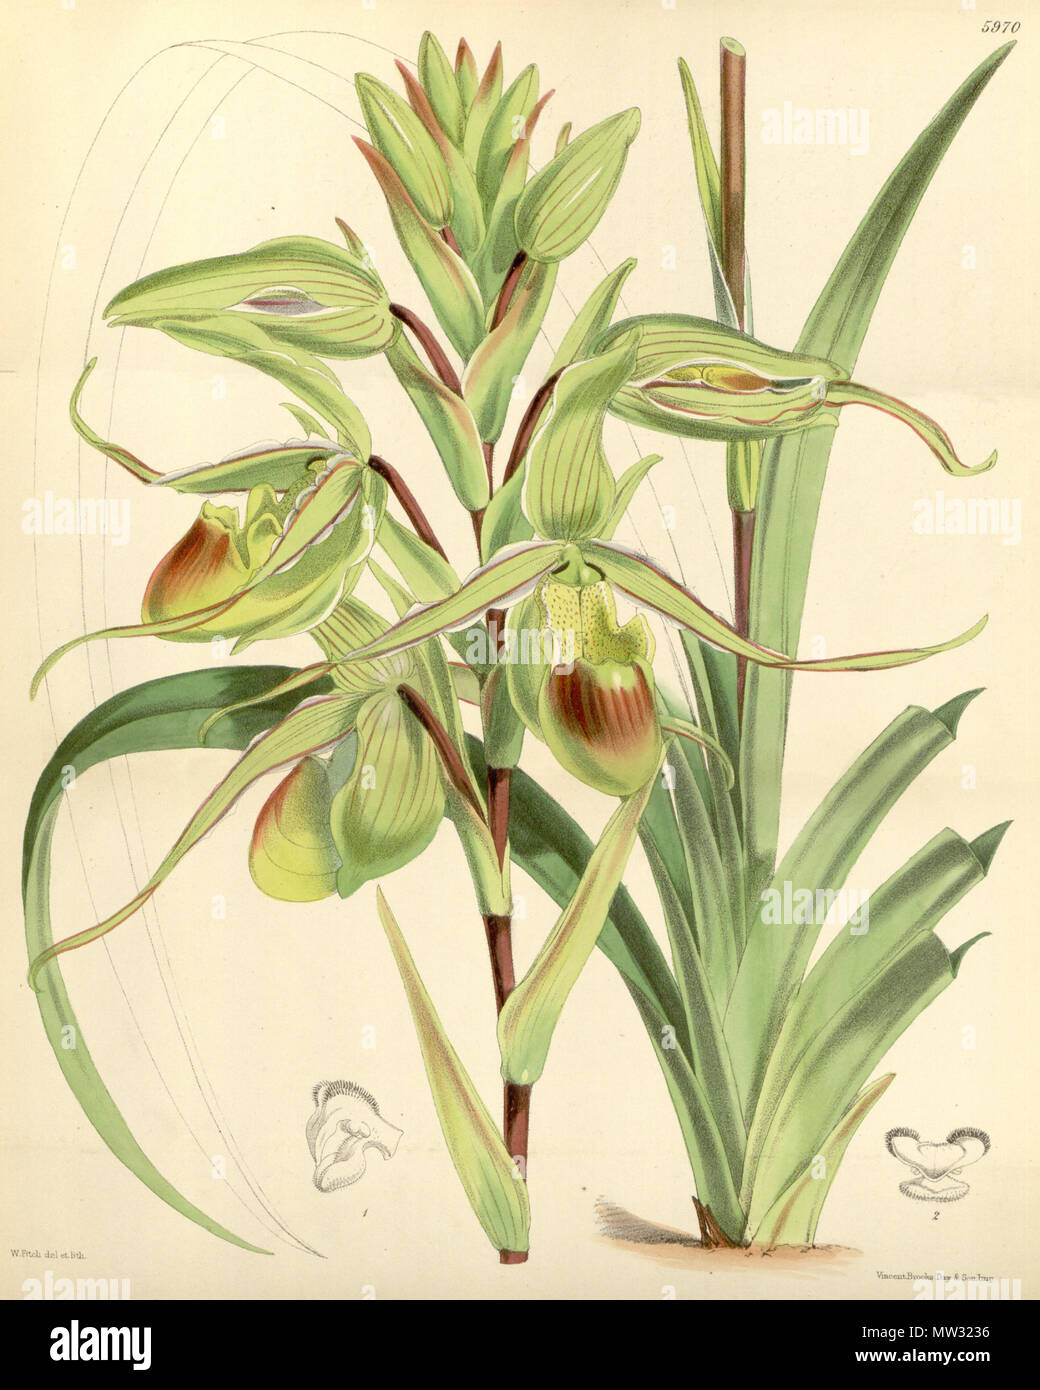 . Illustration of Phragmipedium longifolium (as syn. Cypripedium longifolium) . 1872. Walter Hood Fitch (1817-1892) del. et lith. Description by Joseph Dalton Hooker (1817—1911) 481 Phragmipedium longifolium (as Cypripedium longifolium) - Curtis' 98 (Ser. 3 no. 28) pl. 5970 (1872) Stock Photo